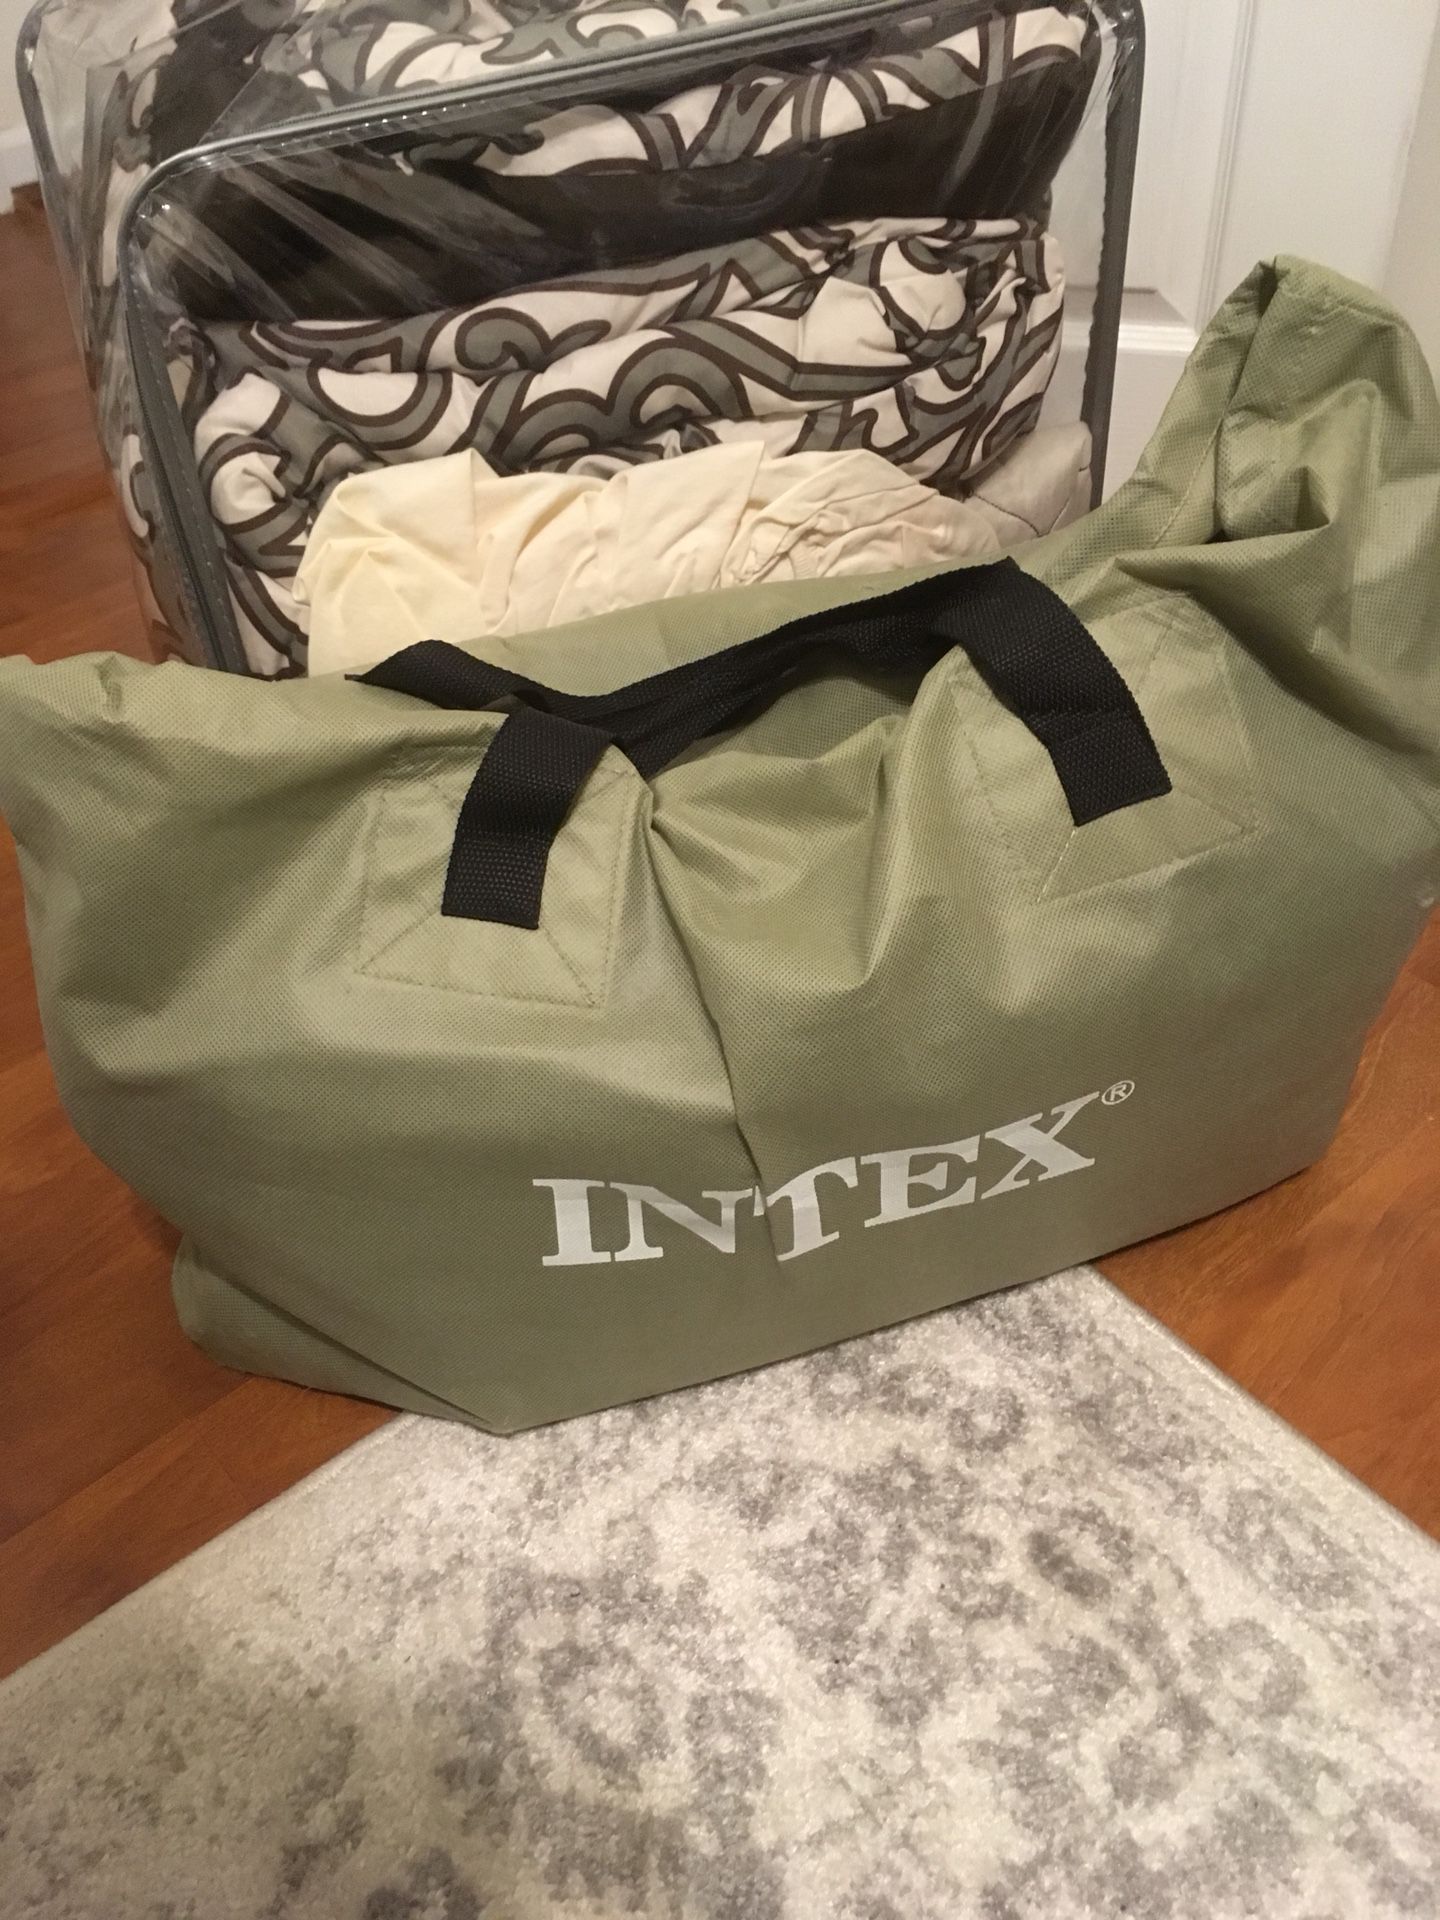 Intex Inflatable Queen Mattress with Pump & Linens